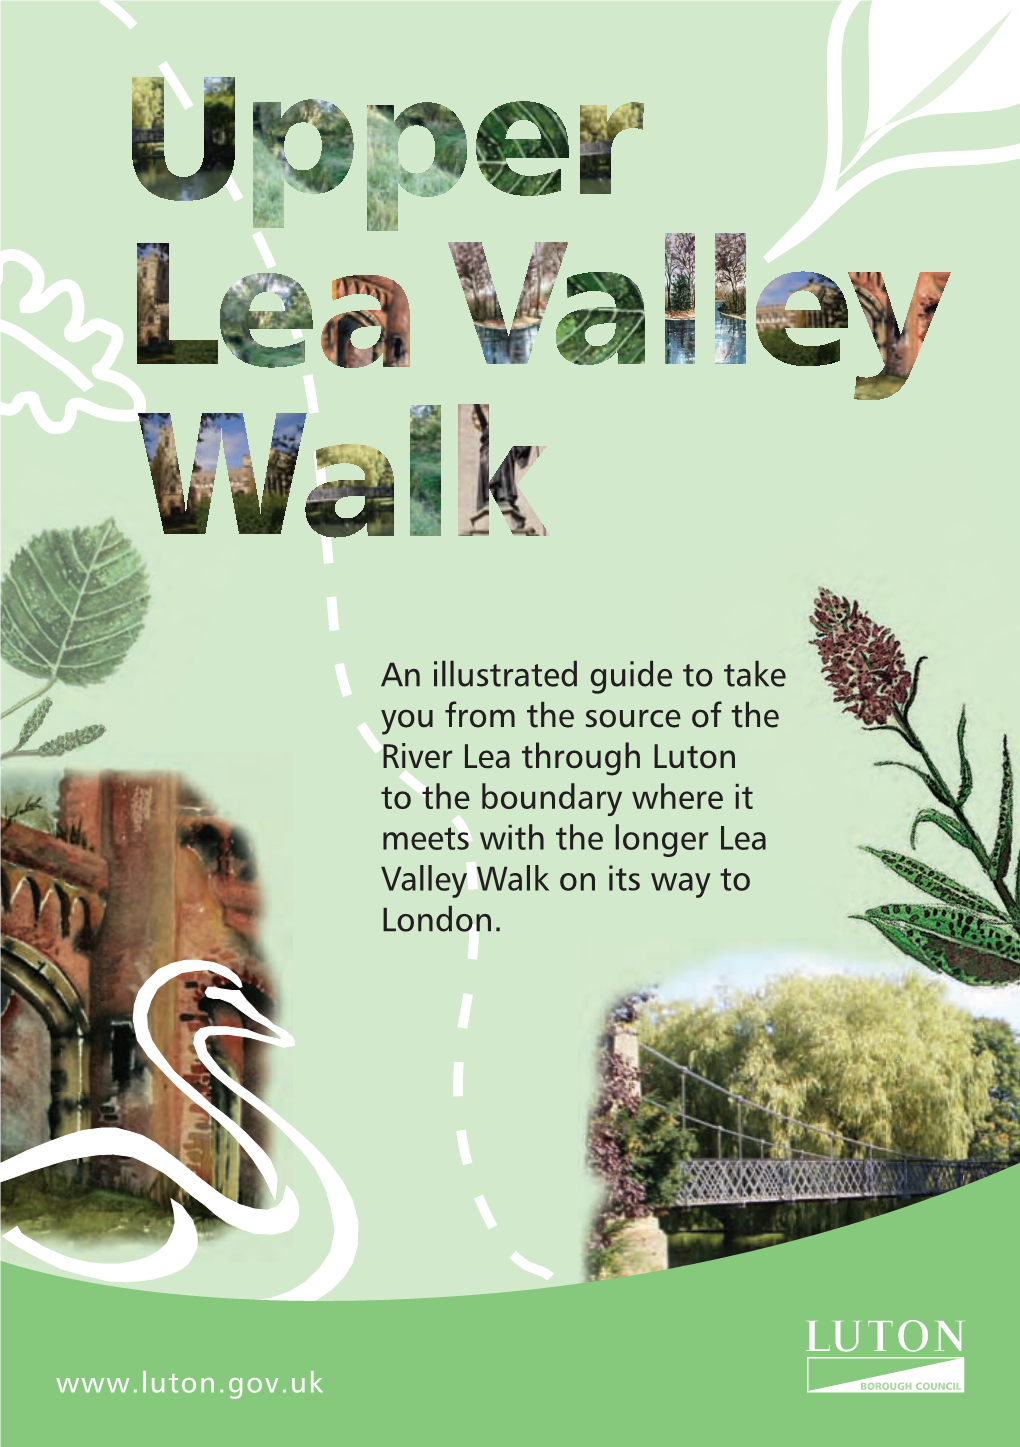 Upper Lea Valley Walk Leaflet FINAL.Indd 1 12/10/10 09:49:31 Linear Parks of the River Lea, Luton